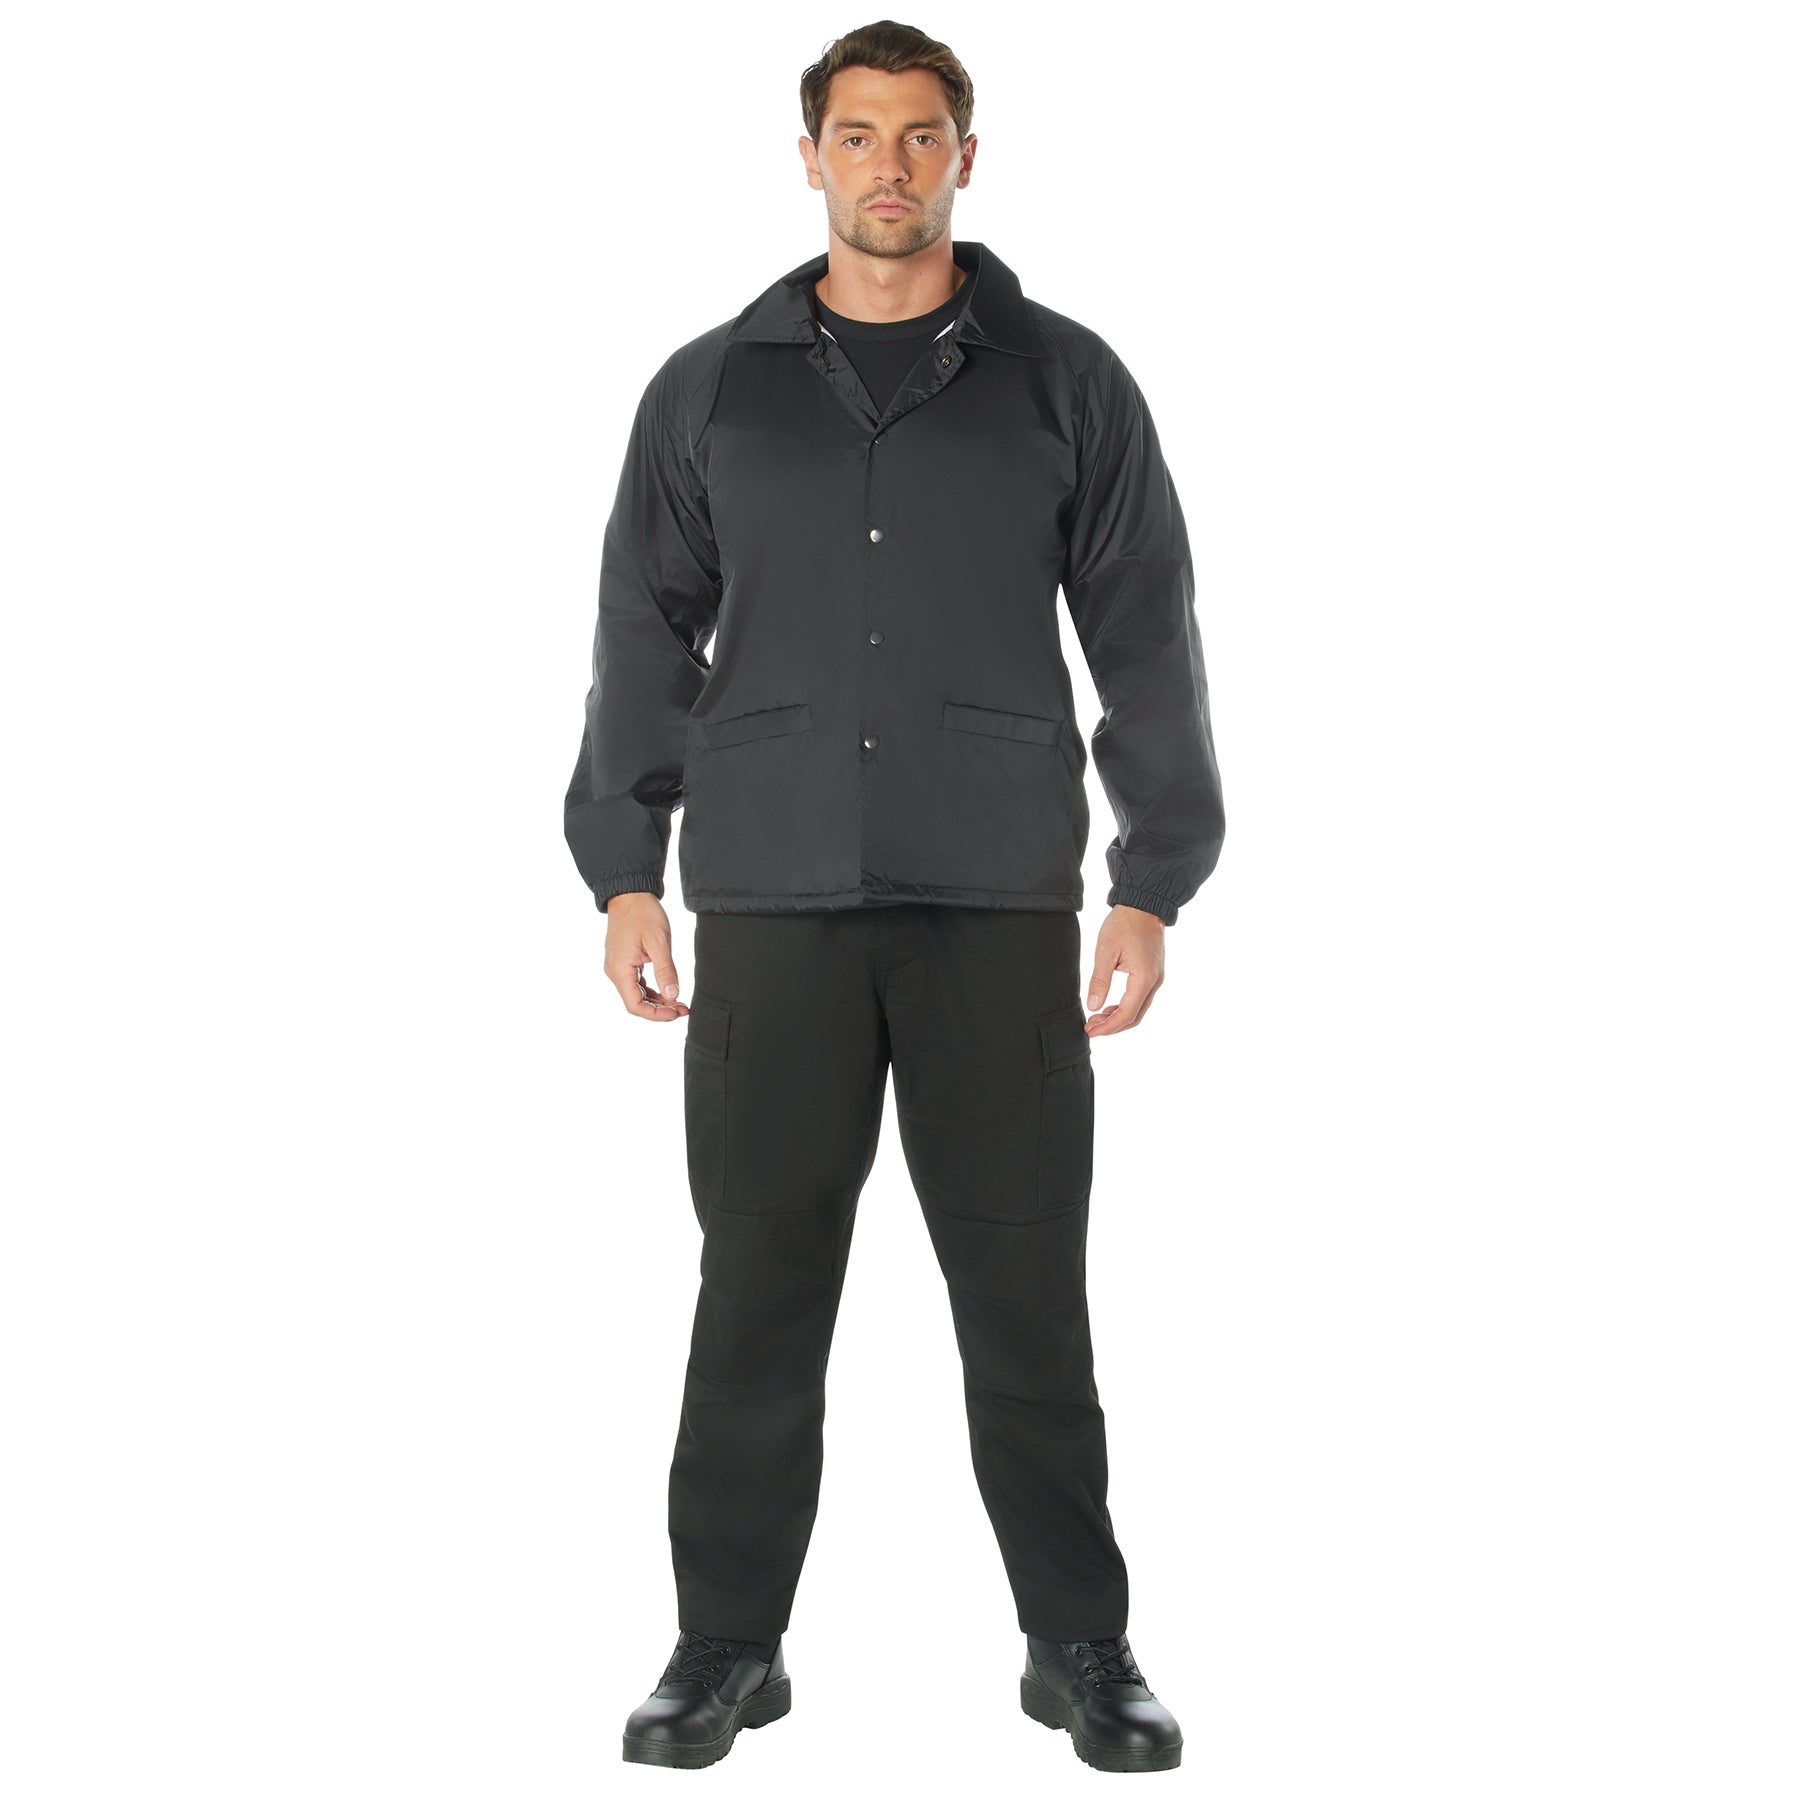 [Public Safety] Nylon Fleece-Lined Security Coaches Jackets